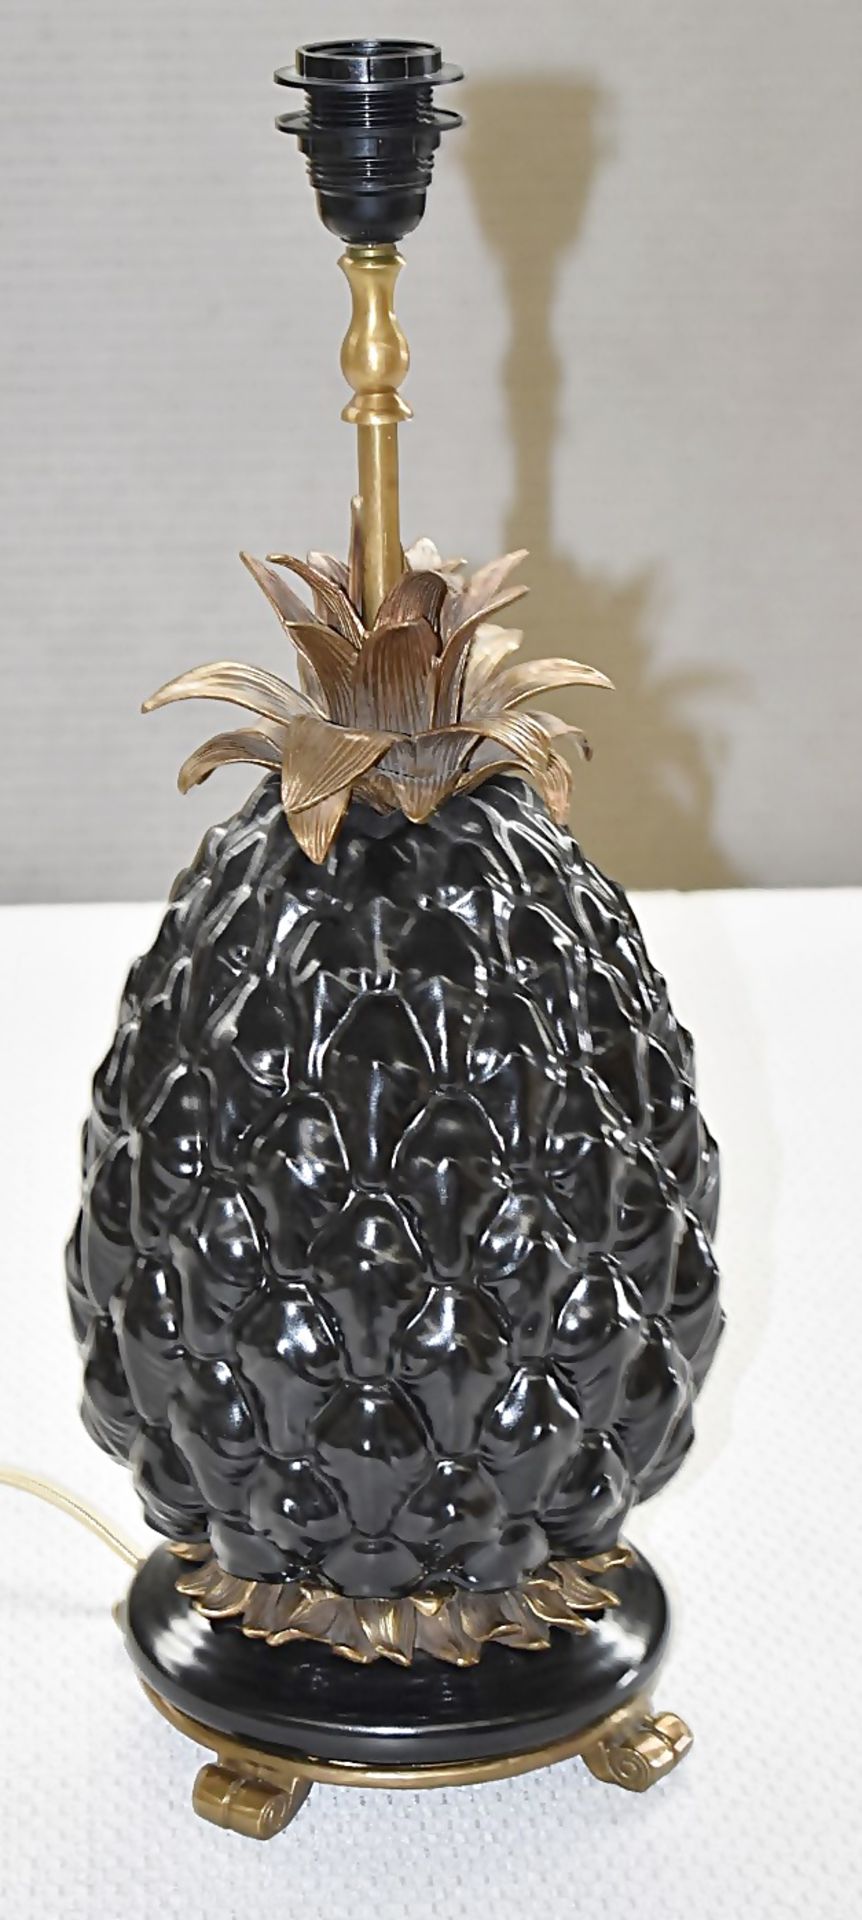 1 x HOUSE OF HACKNEY 'Ananas' Ceramic Pineapple Lamp Stand In Black - Original RRP £545.00 - Image 6 of 8